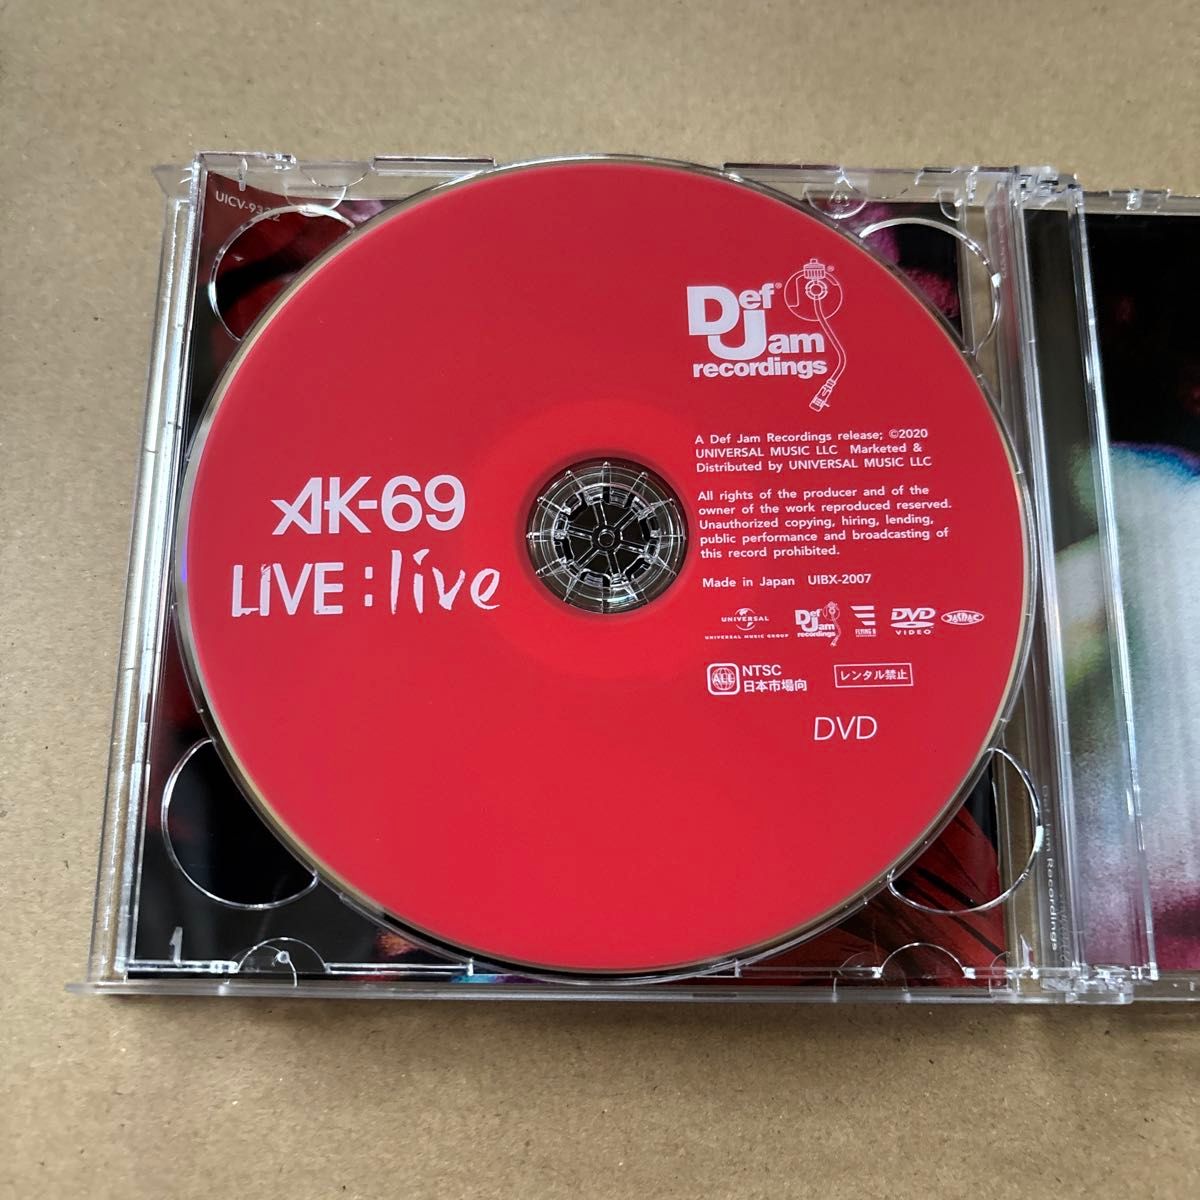 LIVE : live (初回限定盤) (DVD付)AK-69 商品情報お読みください